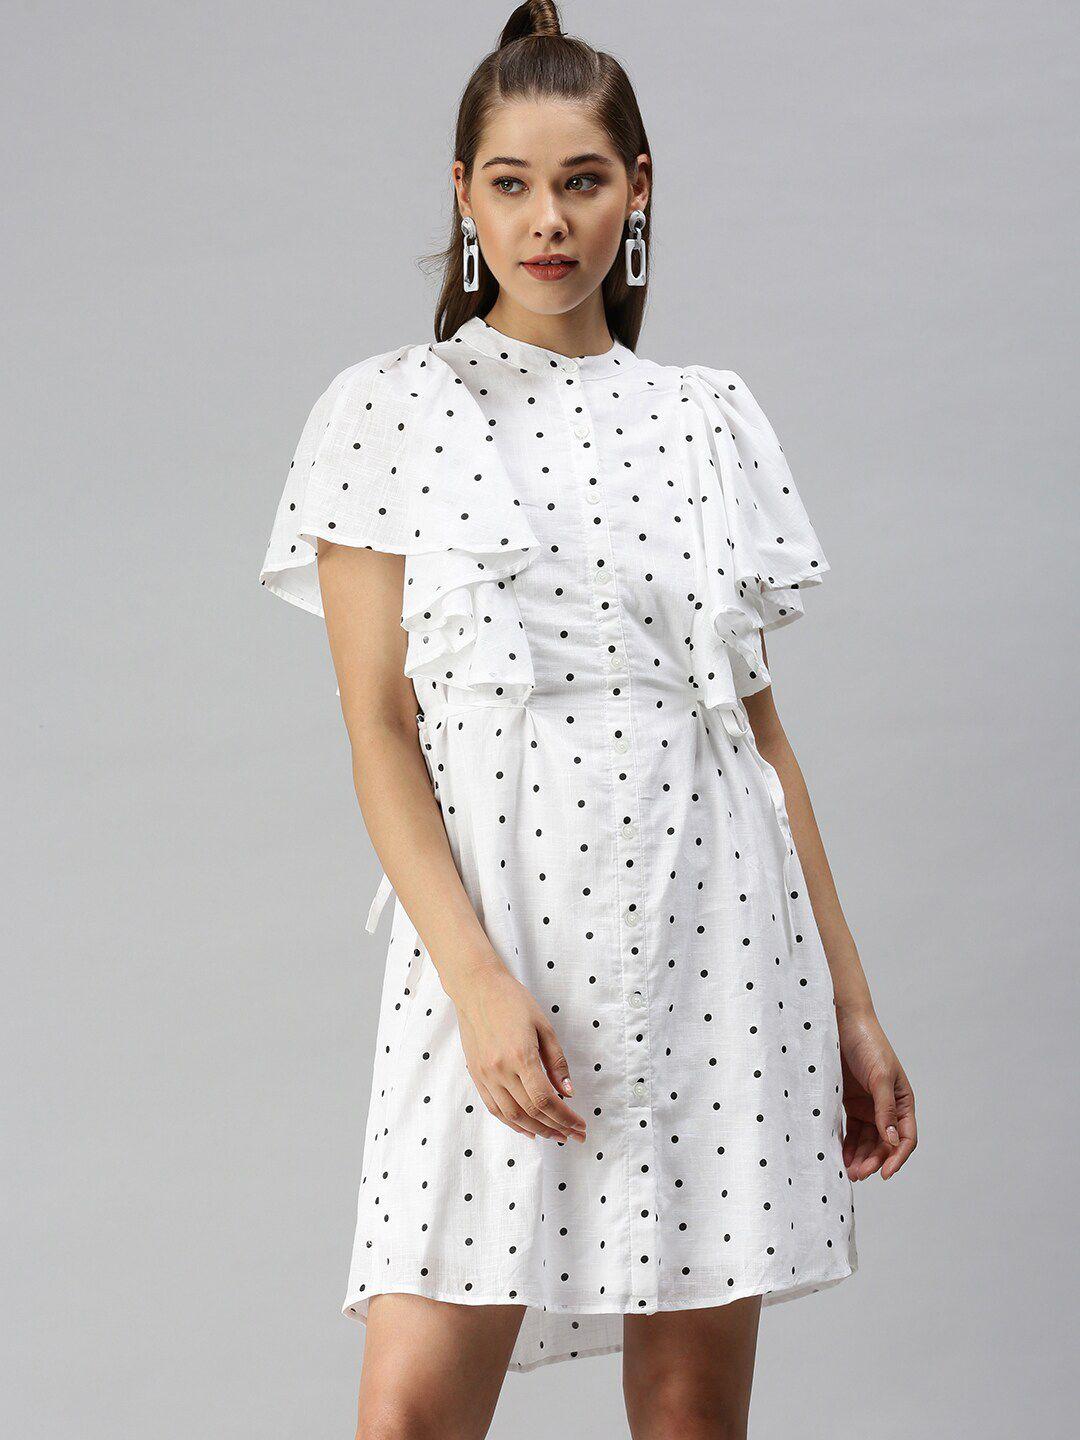 showoff-polka-dots-printed-ruffles-a-line-dress